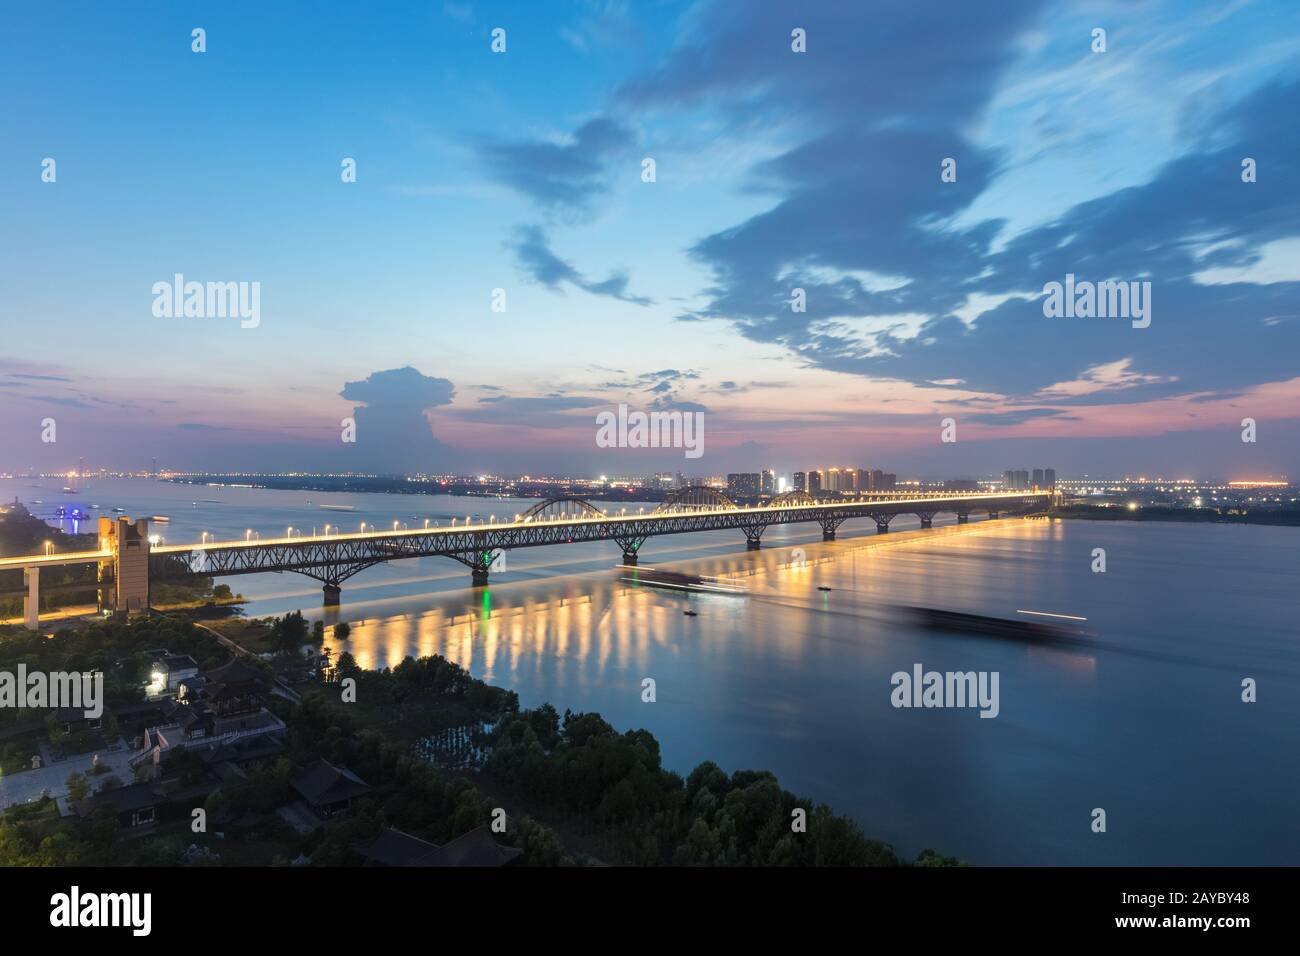 jiujiang combined bridge in nightfall Stock Photo